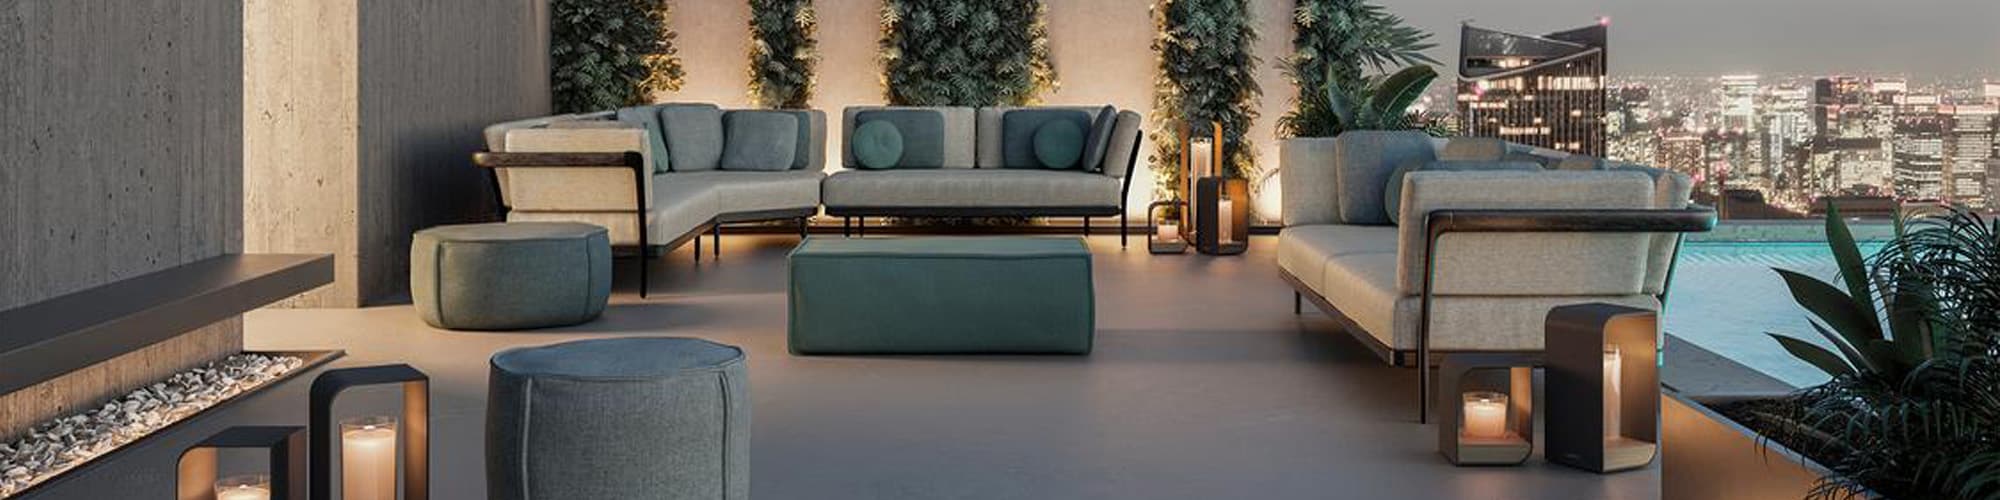 Manutti Outdoor Furniture by FCI London